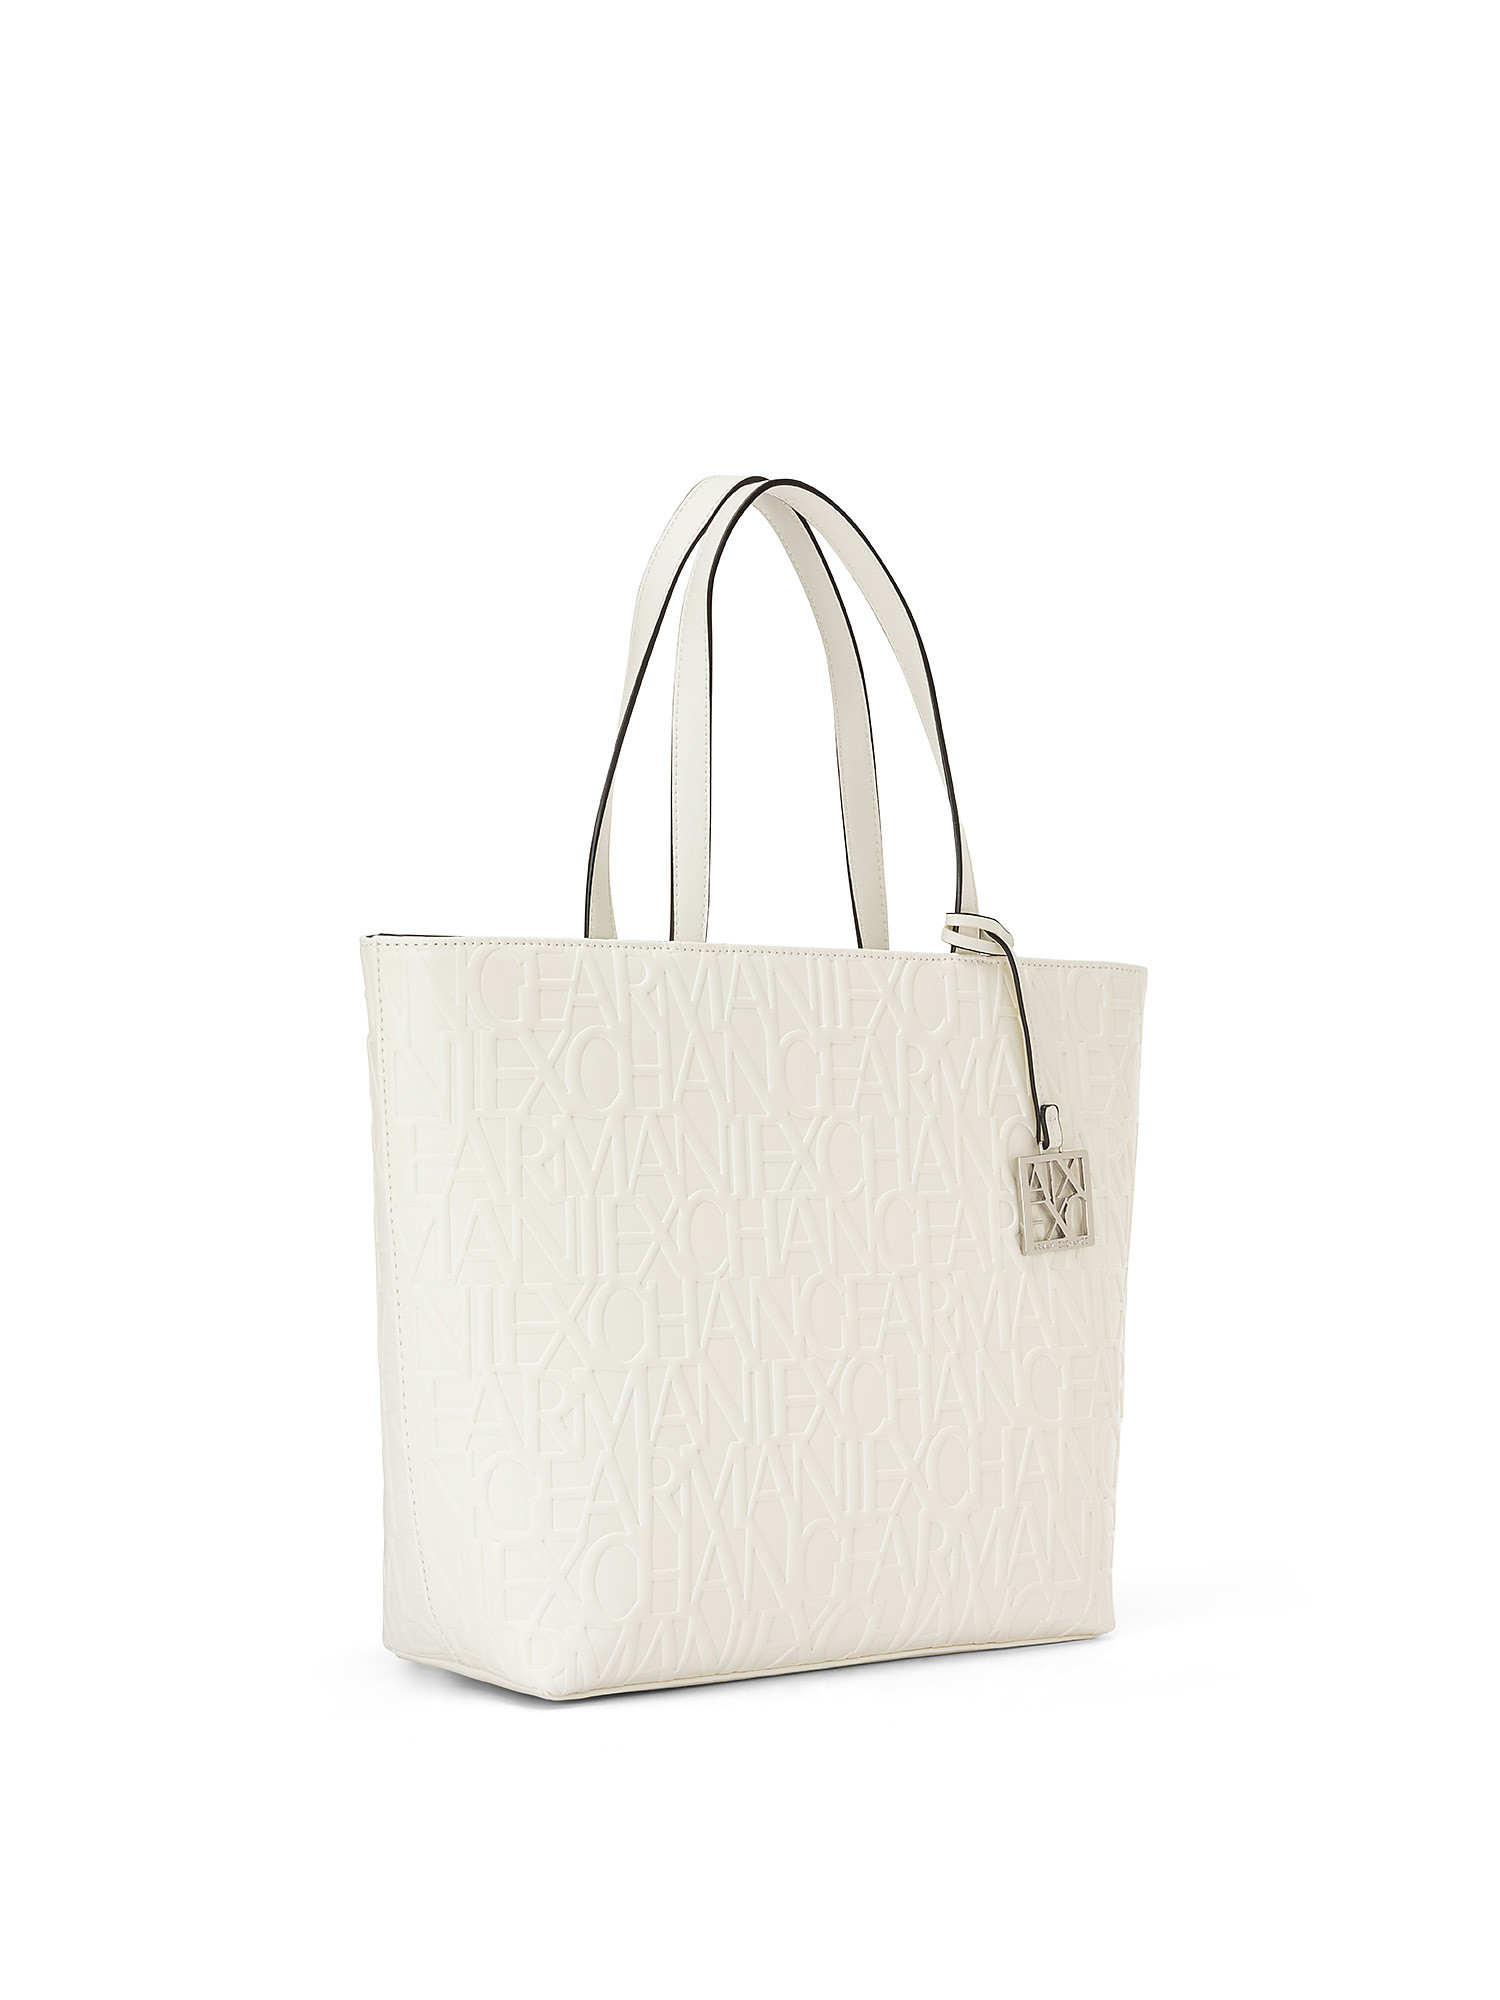 Shopping bag con cerniera superiore, Bianco, large image number 2